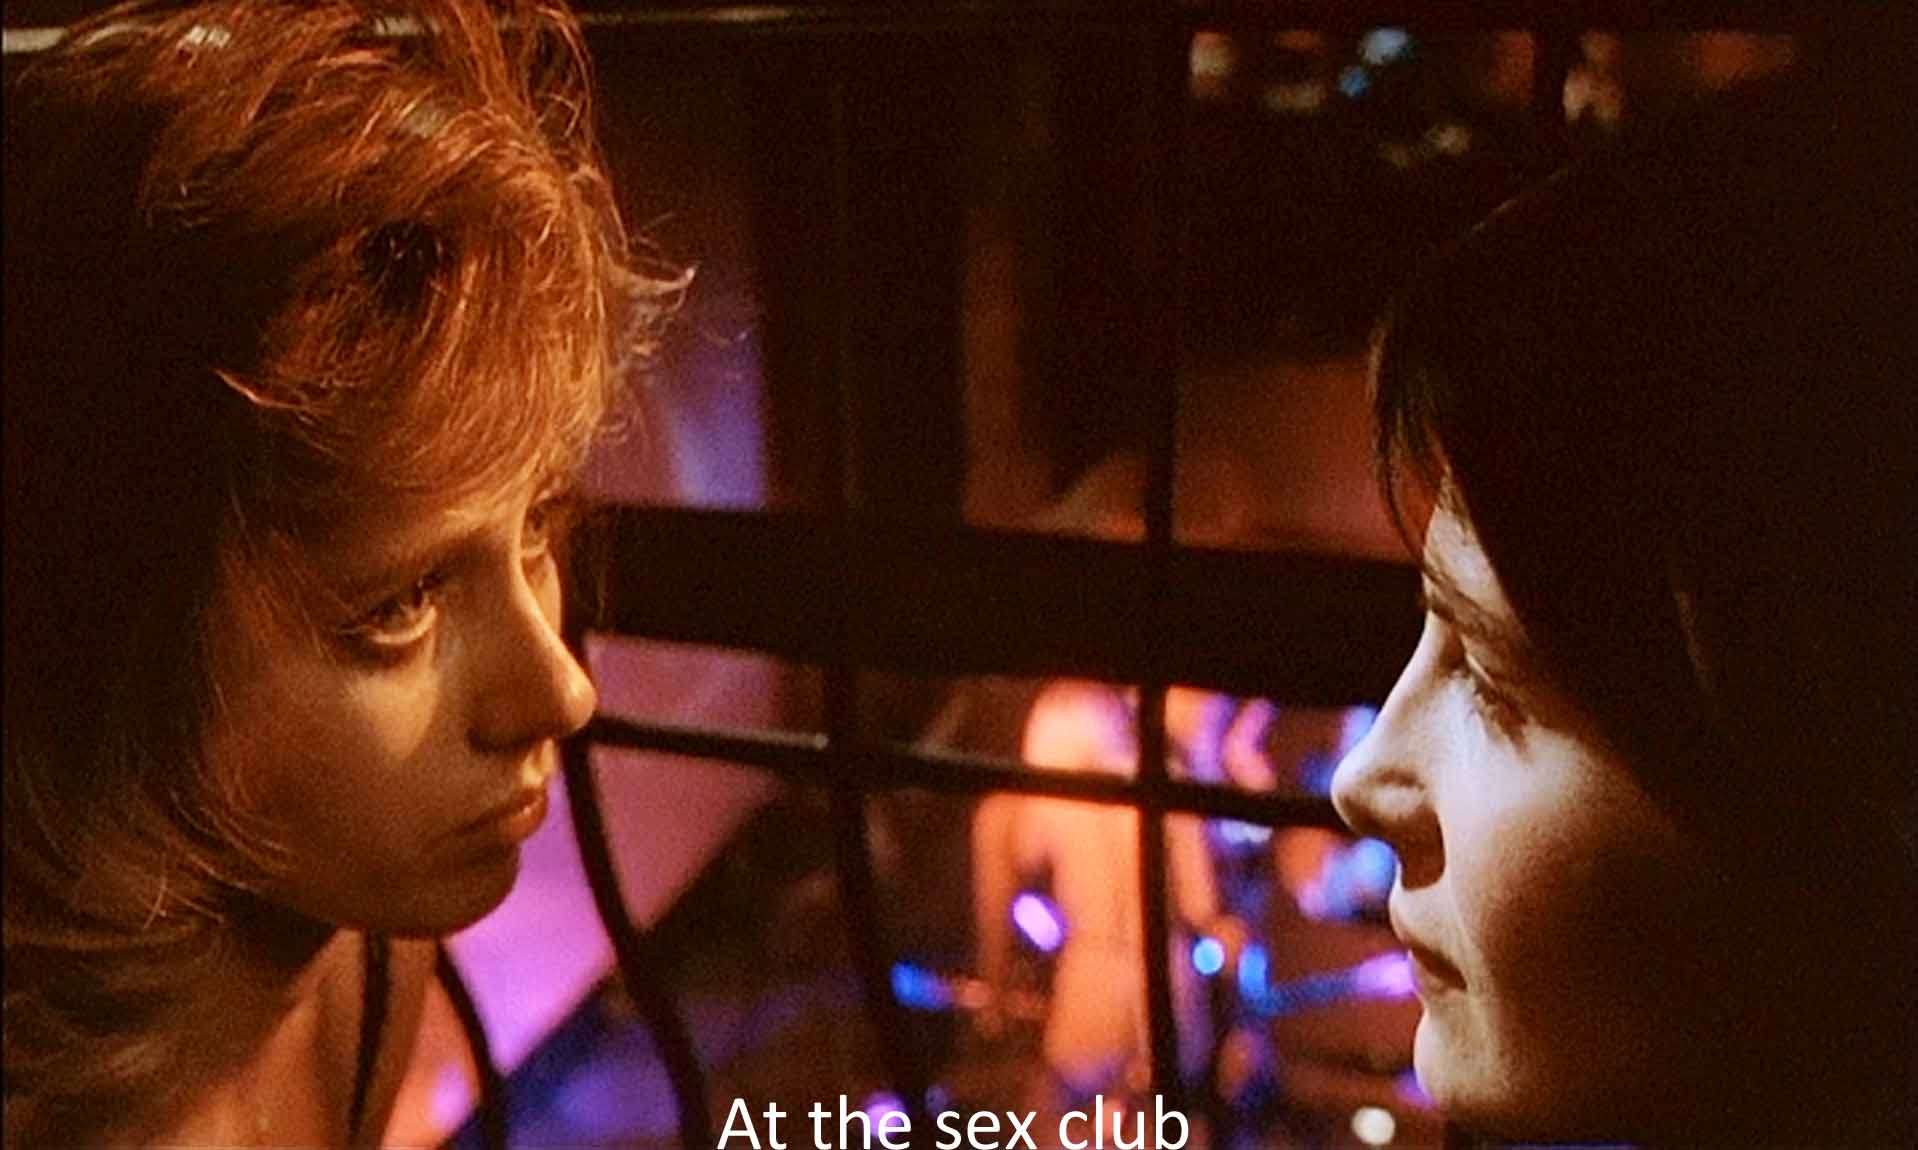 The sex club